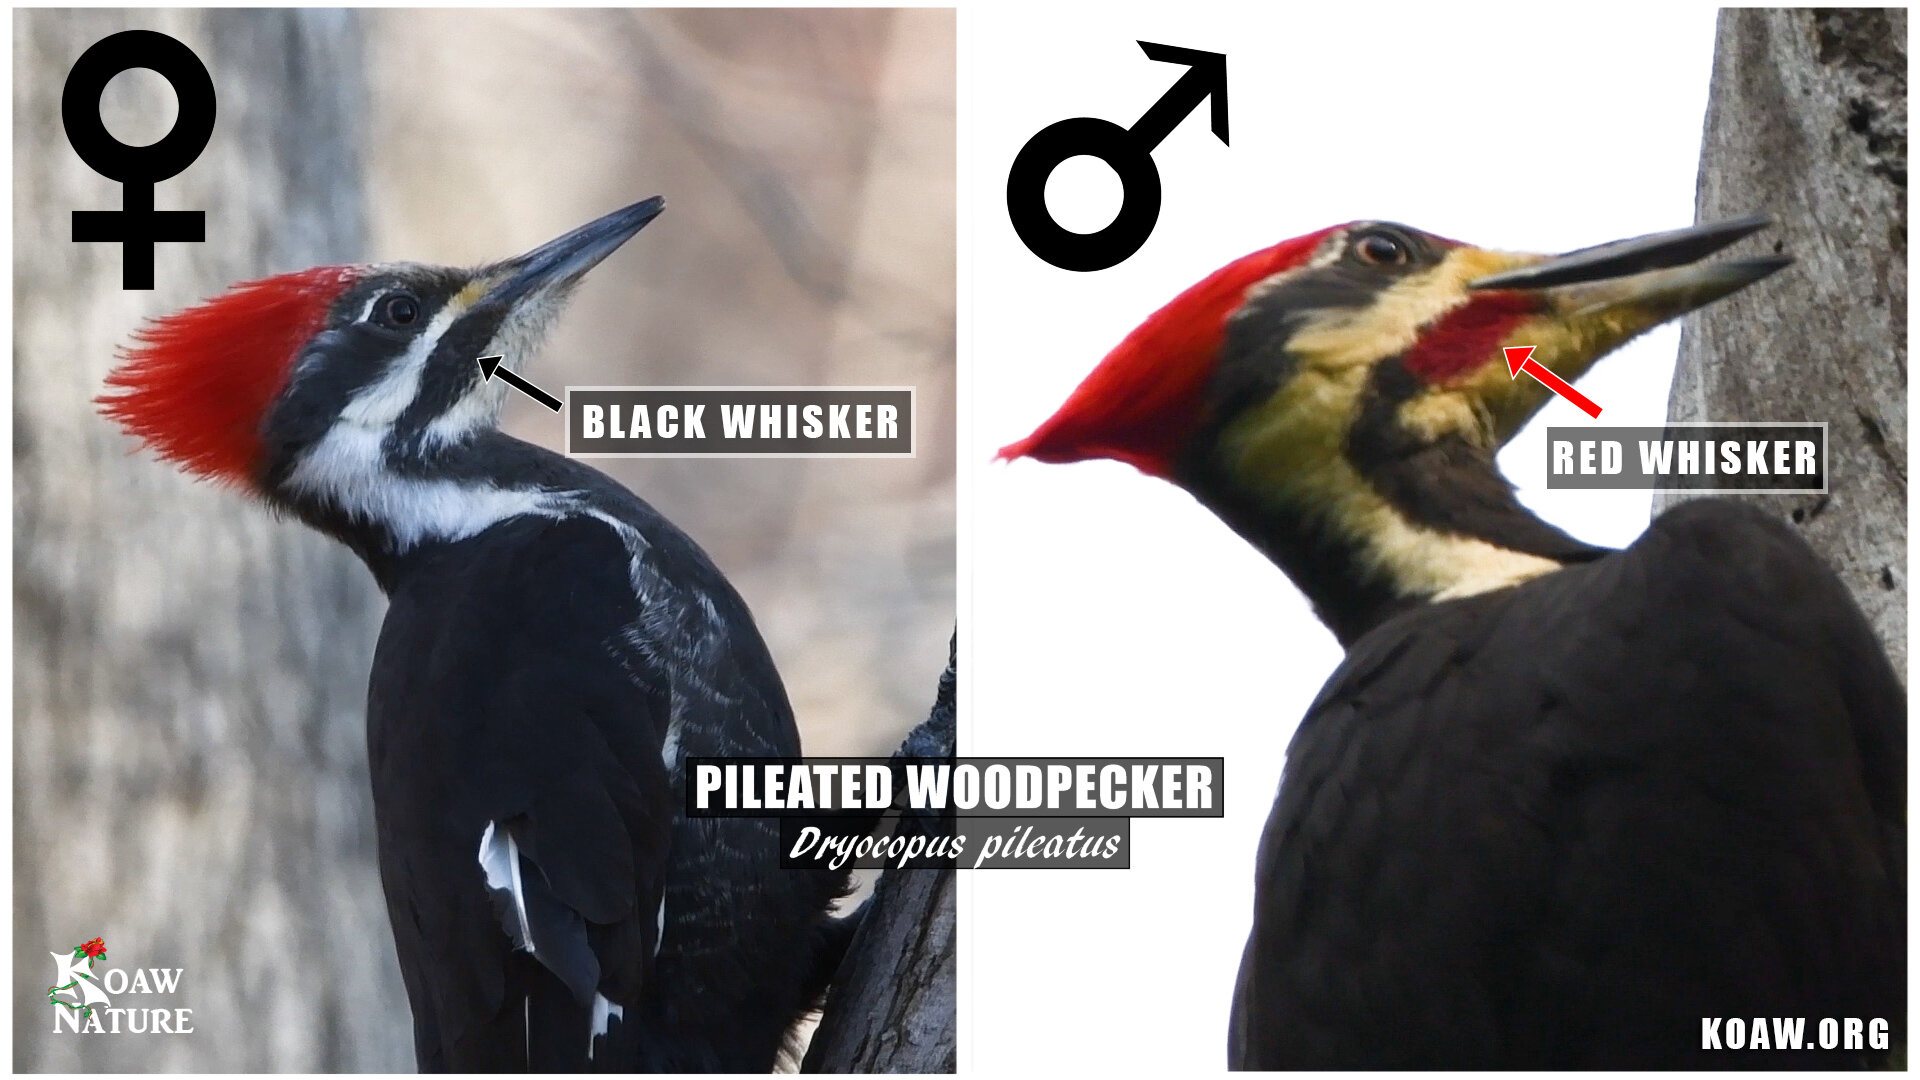 Pileated Woodpecker Male vs Female Koaw Nature Whiskers.jpg